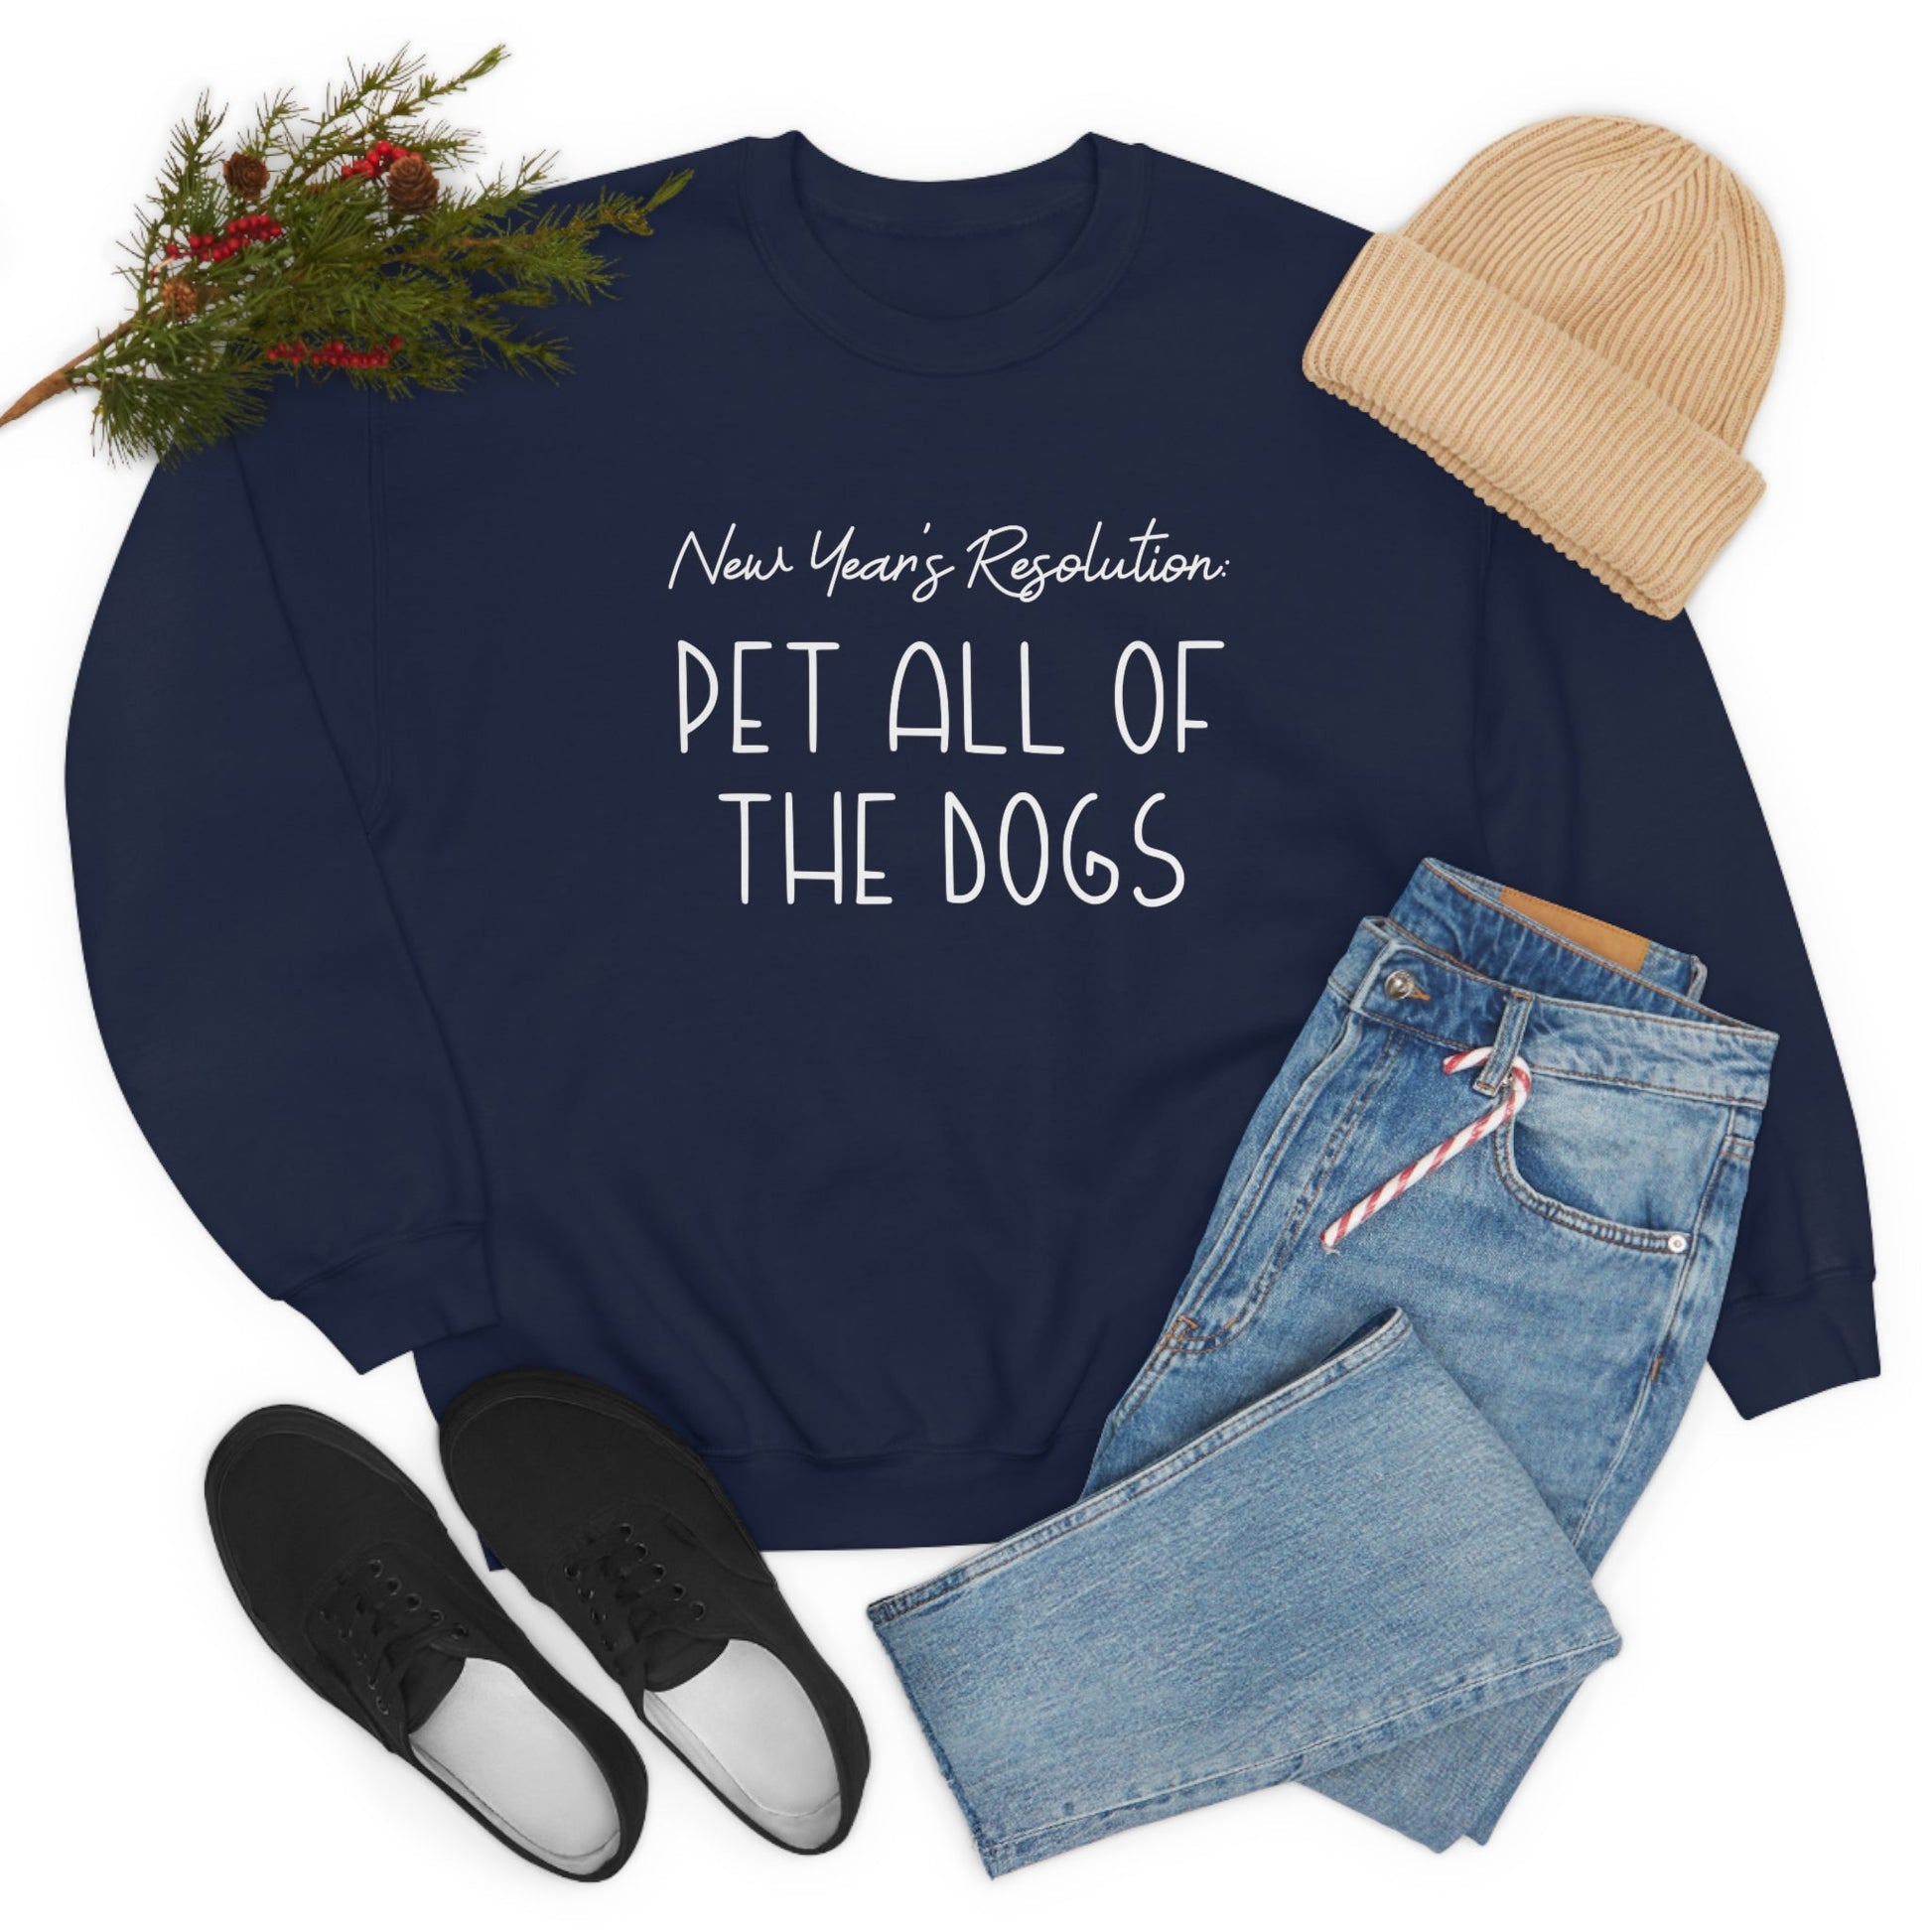 New Year's Resolution: Pet All Of The Dogs | Crewneck Sweatshirt - Detezi Designs-88221414568005387603